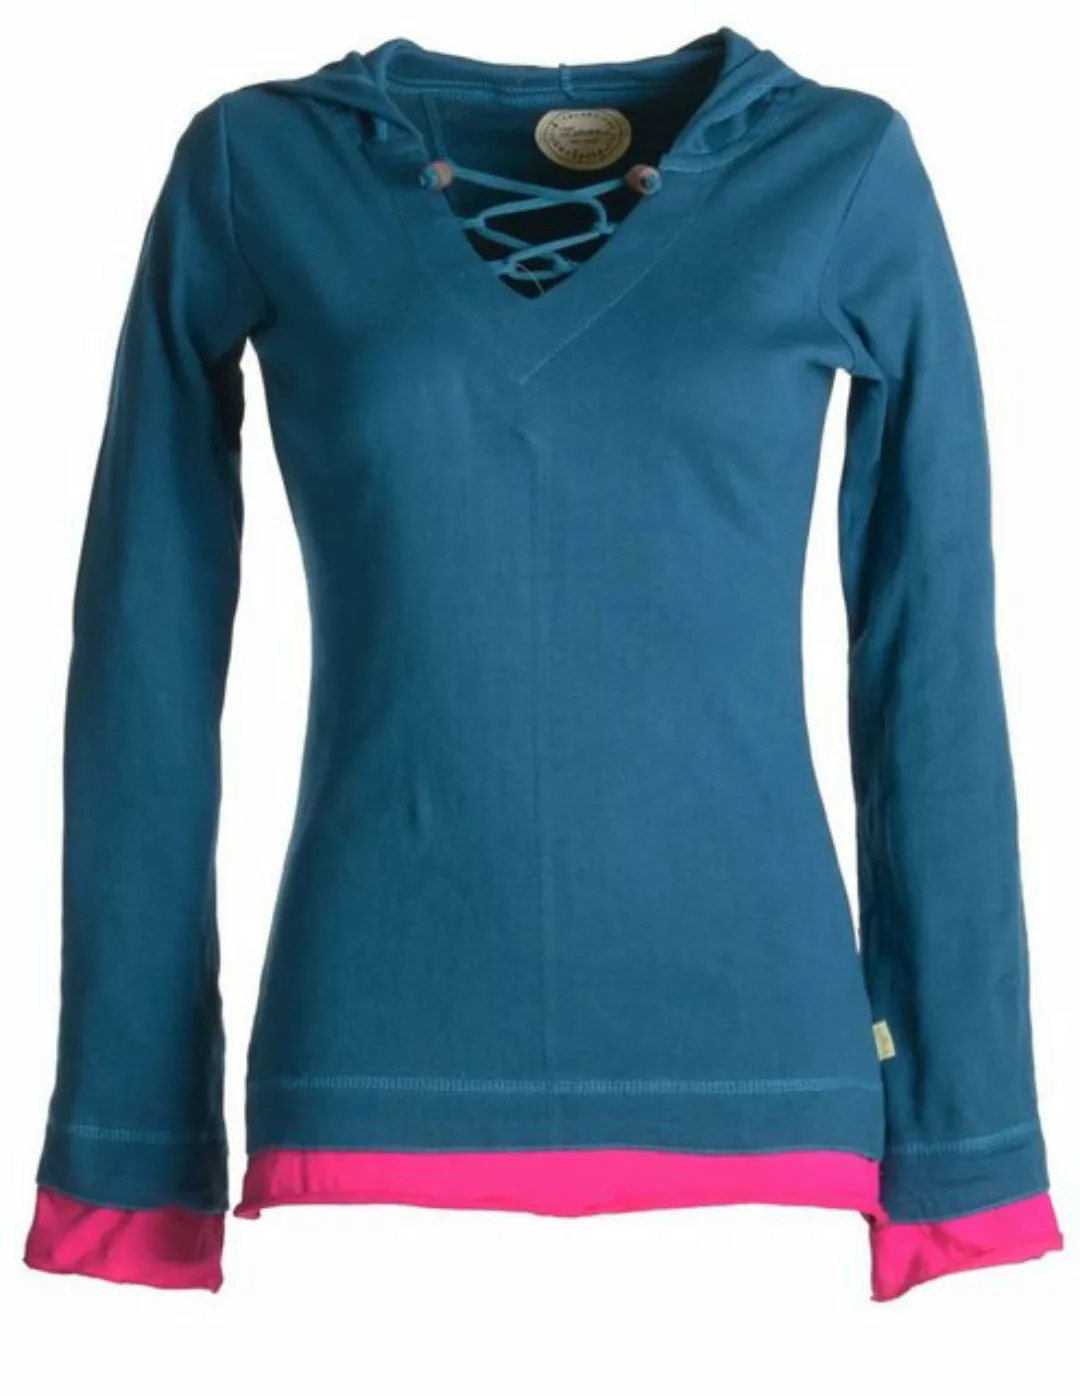 Vishes Zipfelshirt Lagenlook Longsleeve Shirt mit Zipfelkapuze Hoodie, Swea günstig online kaufen